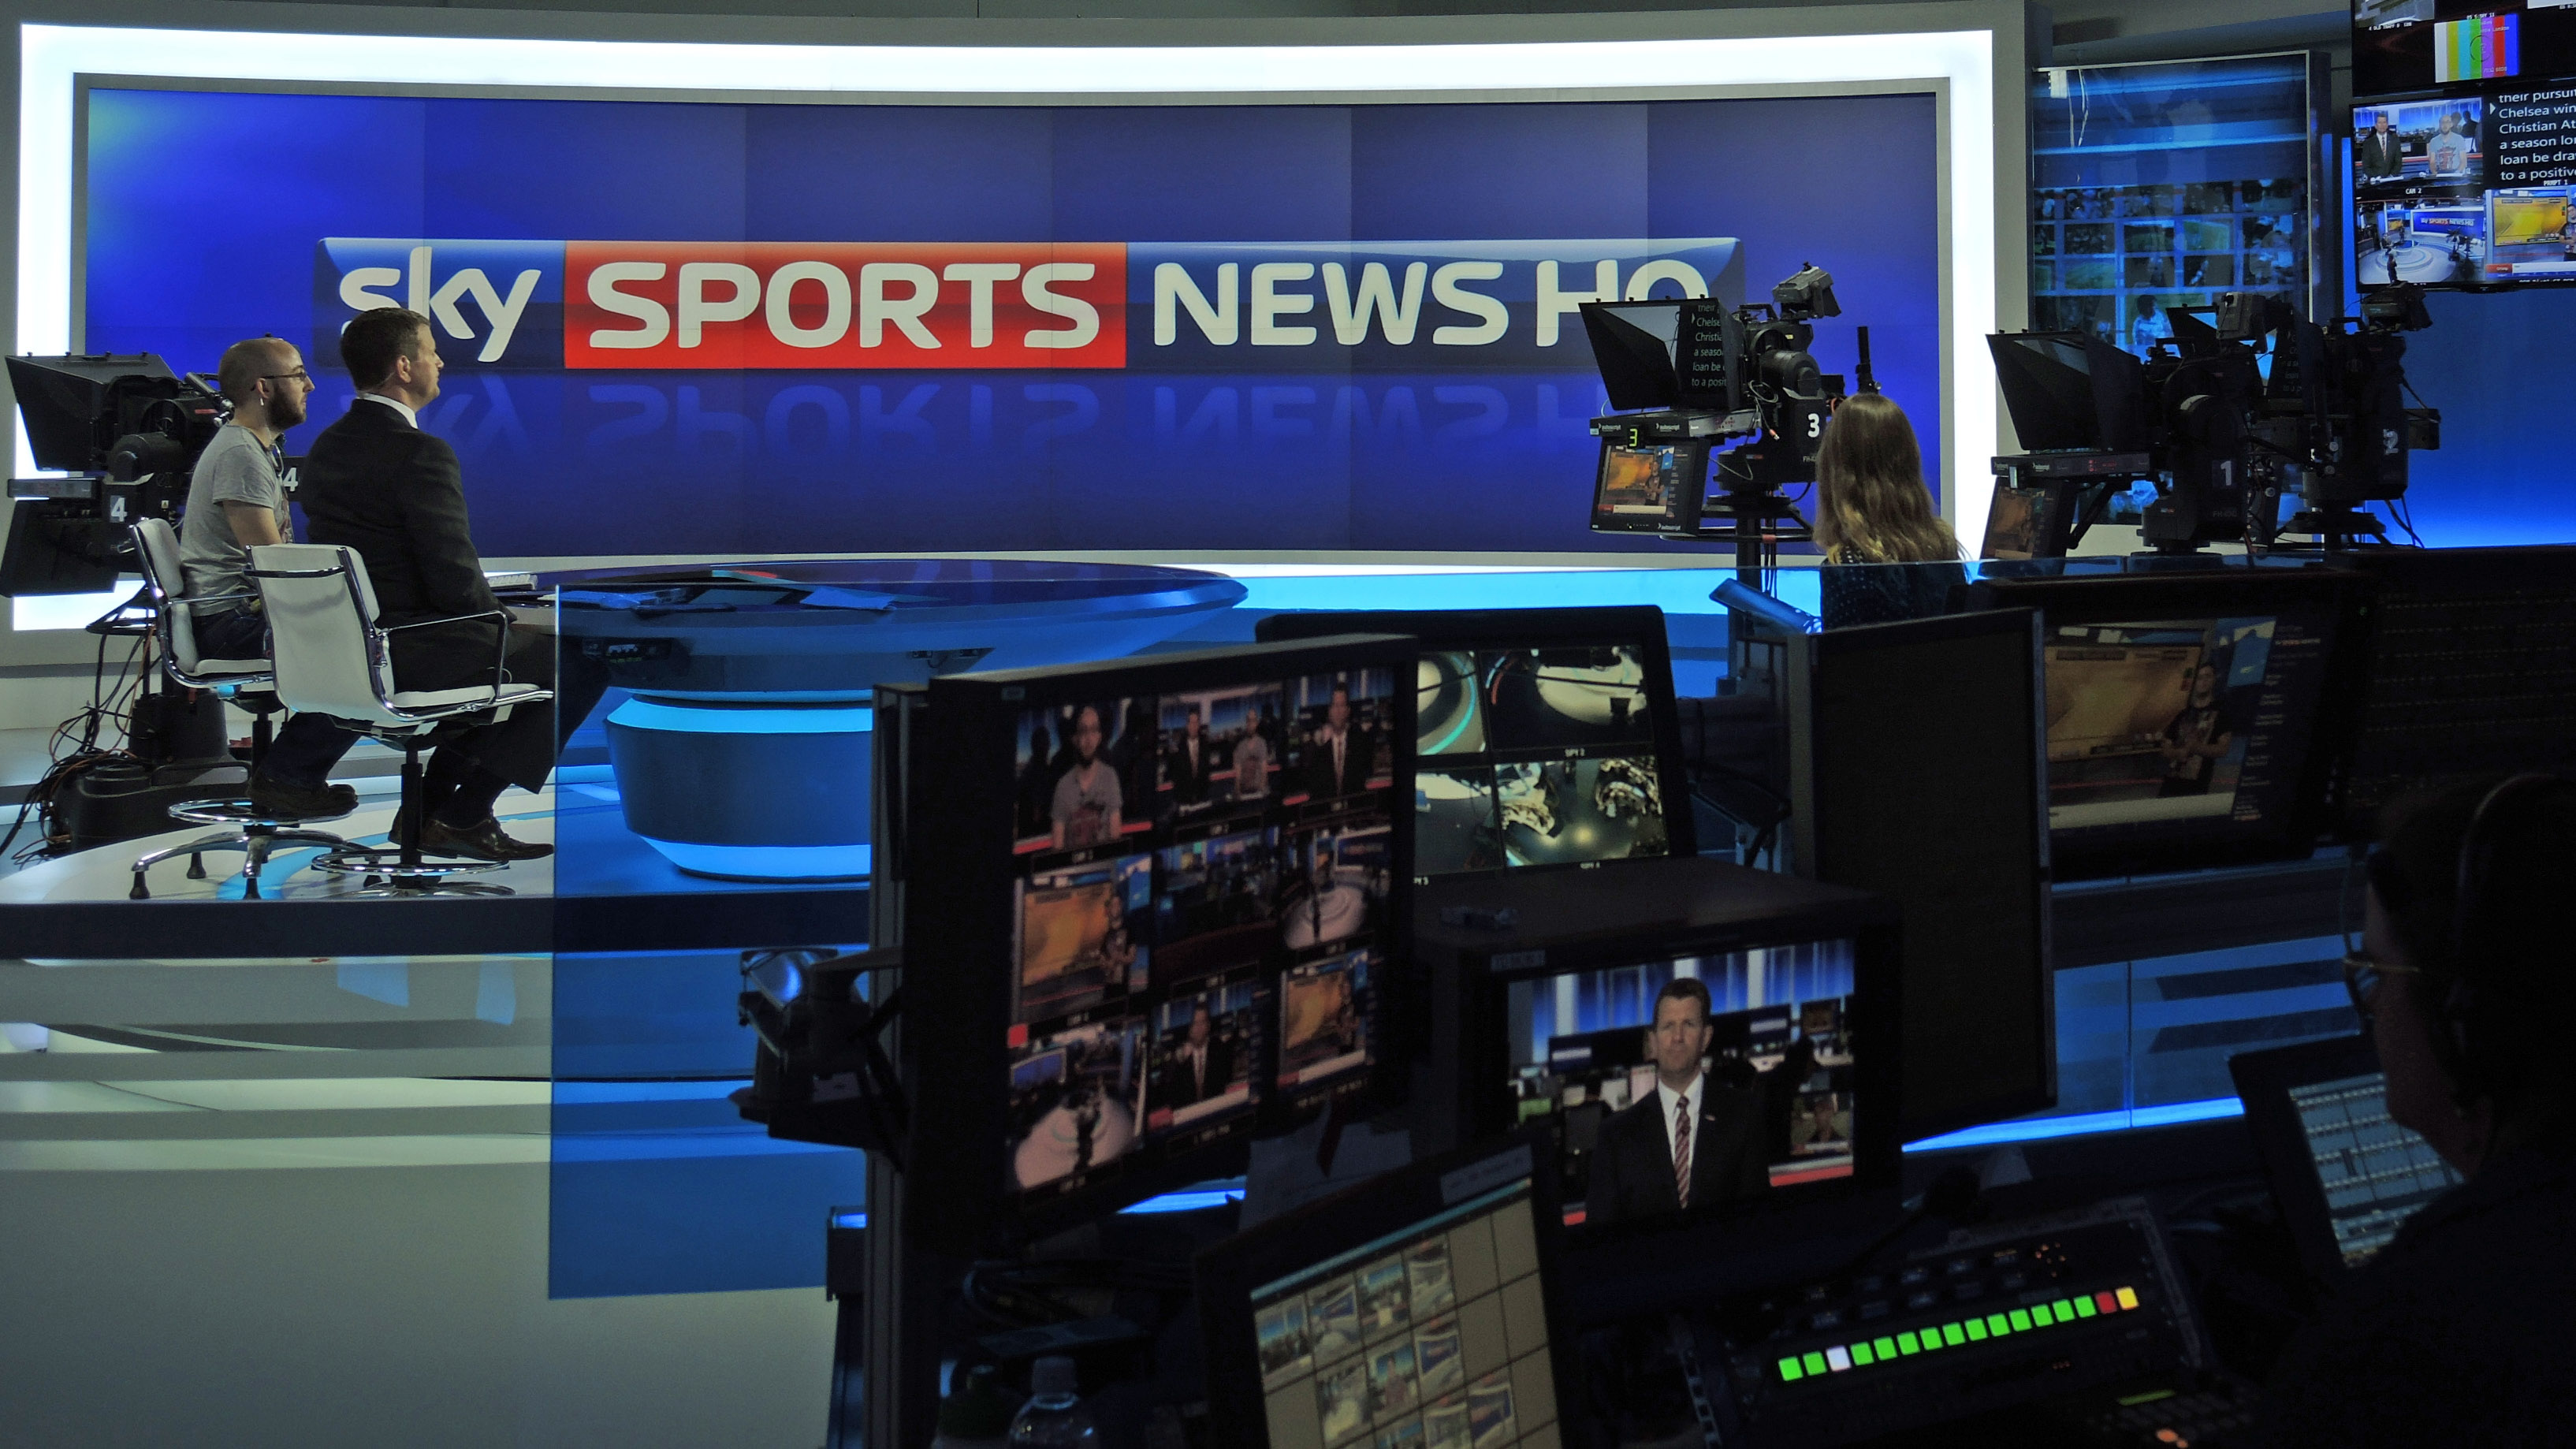 Sky sports live streaming. Студия Скай Спортс. Sky Sports newspaper. Телевизион спорт. Sky Sport News Studio.